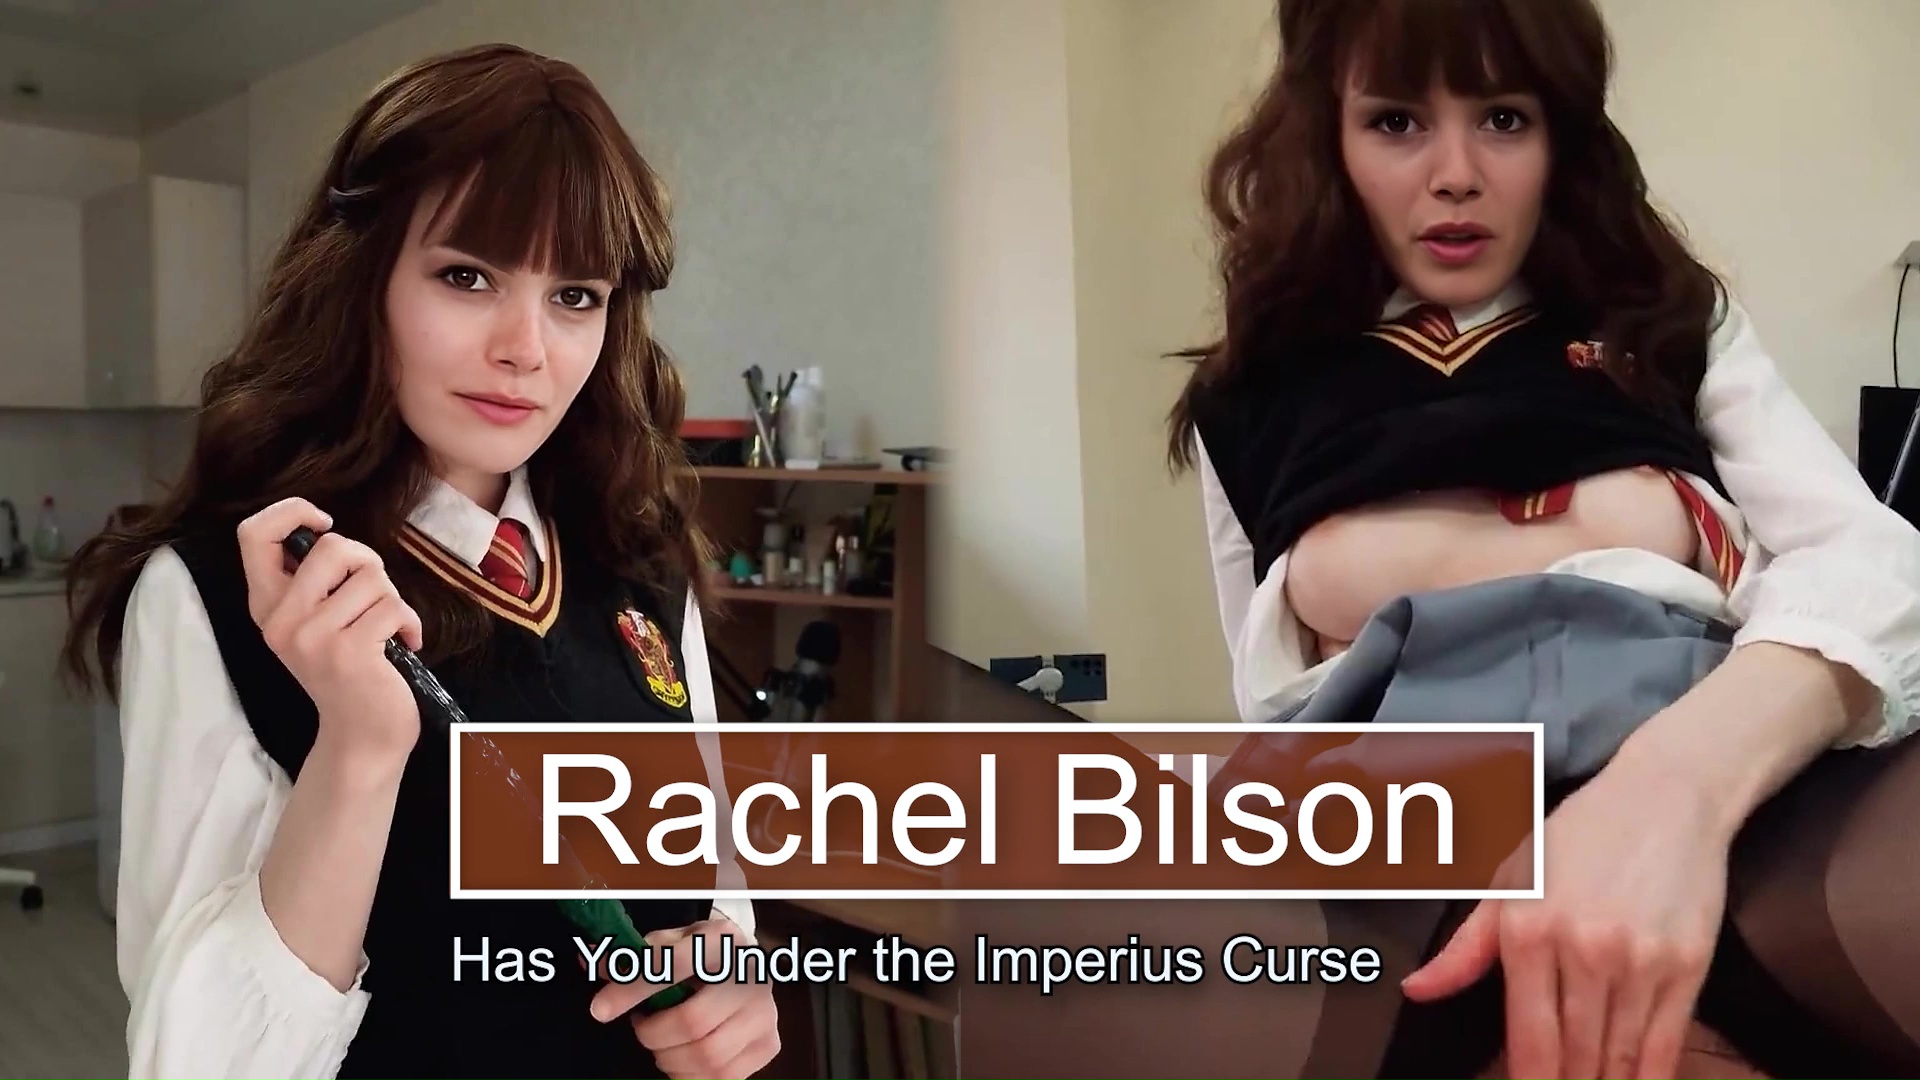 Rachel Bilson - Has You Under the Imperius Curse - Trailer